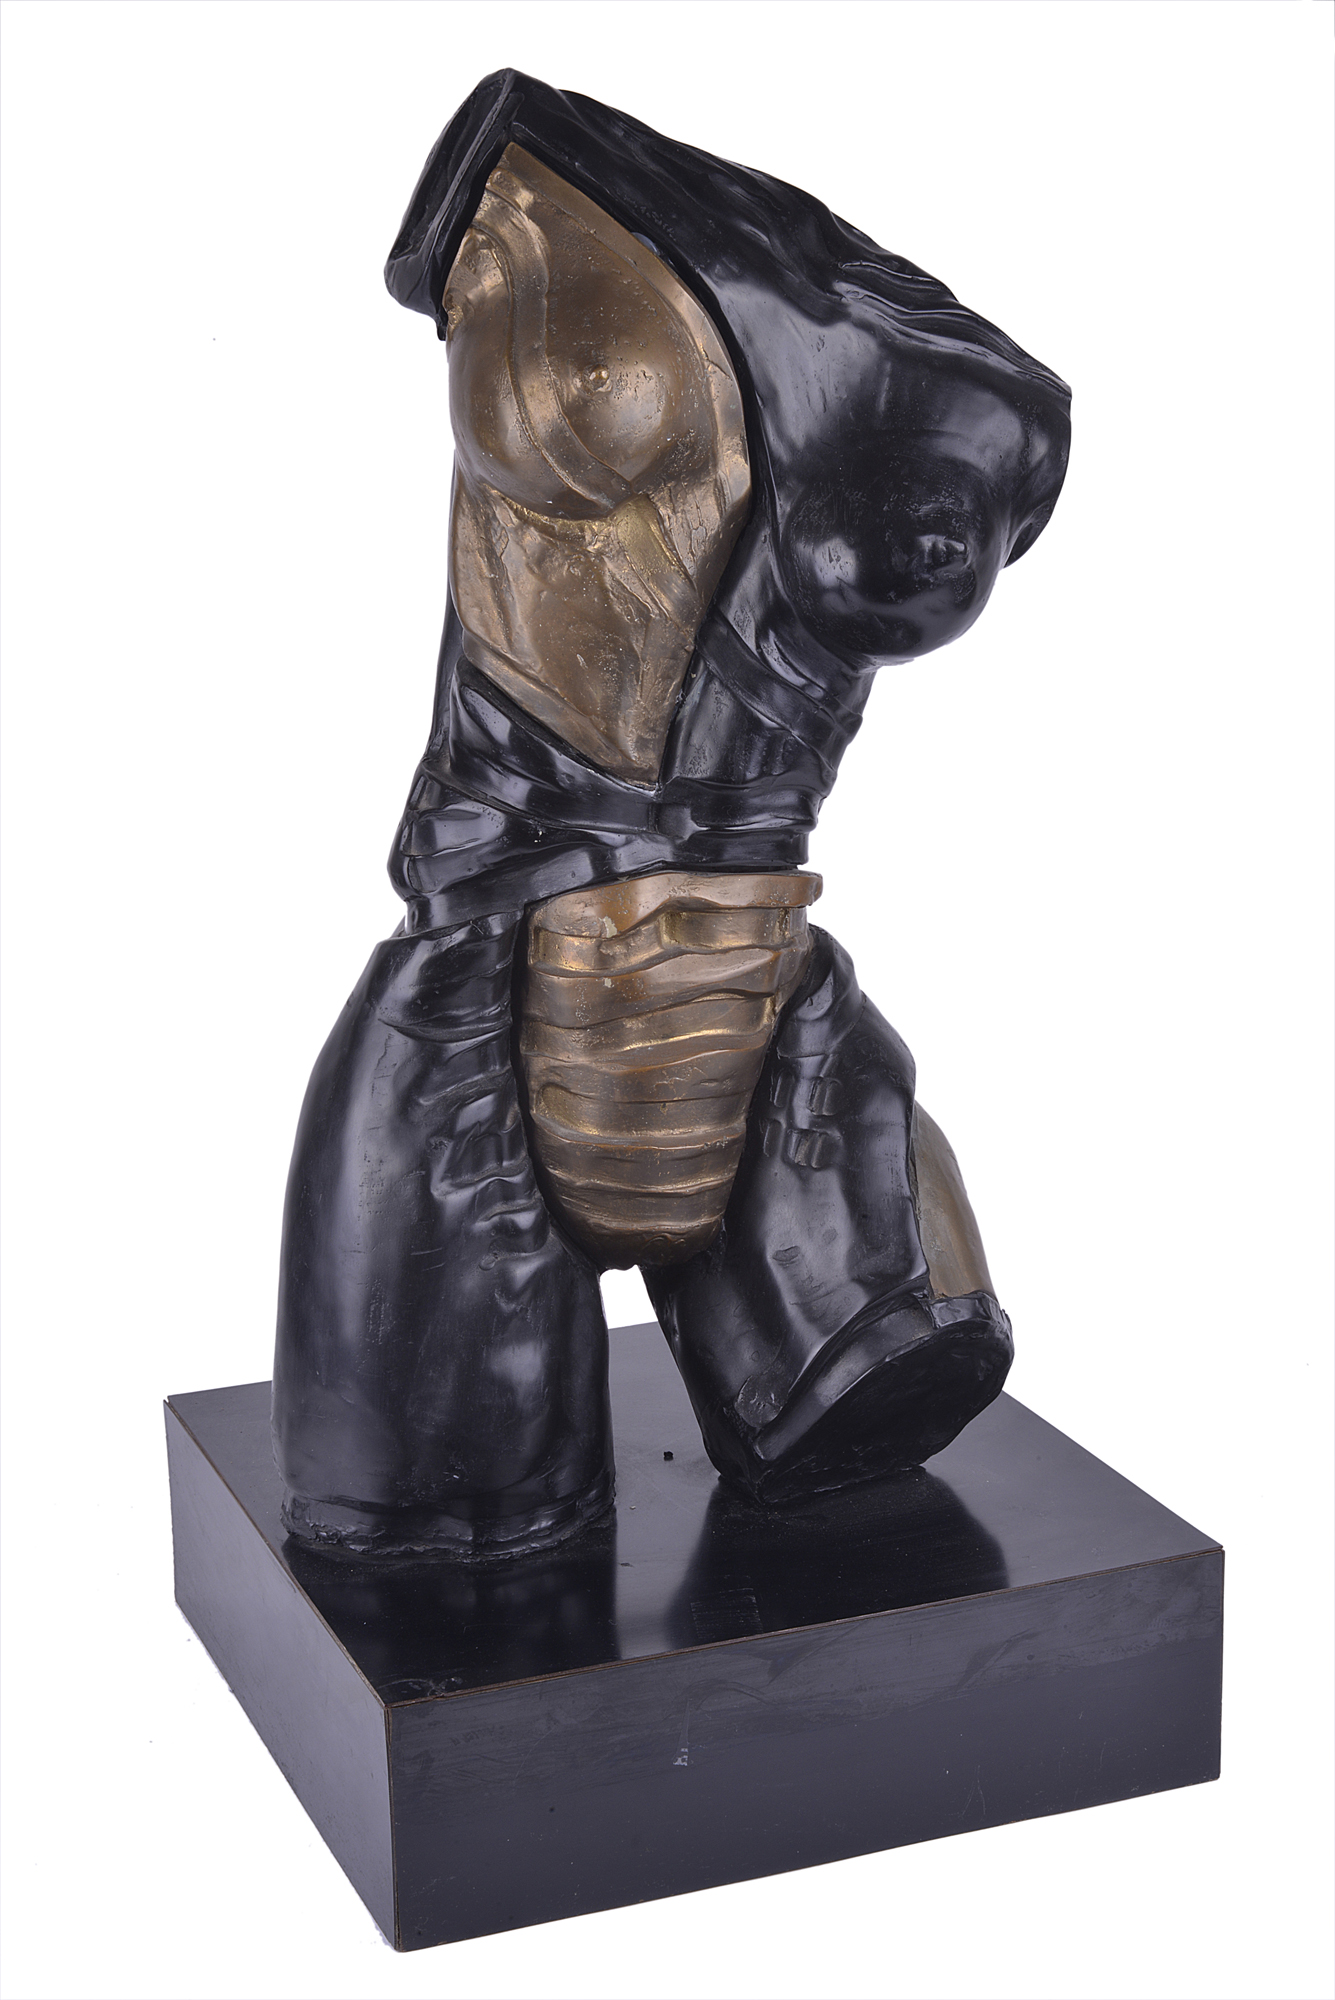 Enrico Manera (Asmara, 1947- ), a contemporary sculpture in fibreglass and bronze representing